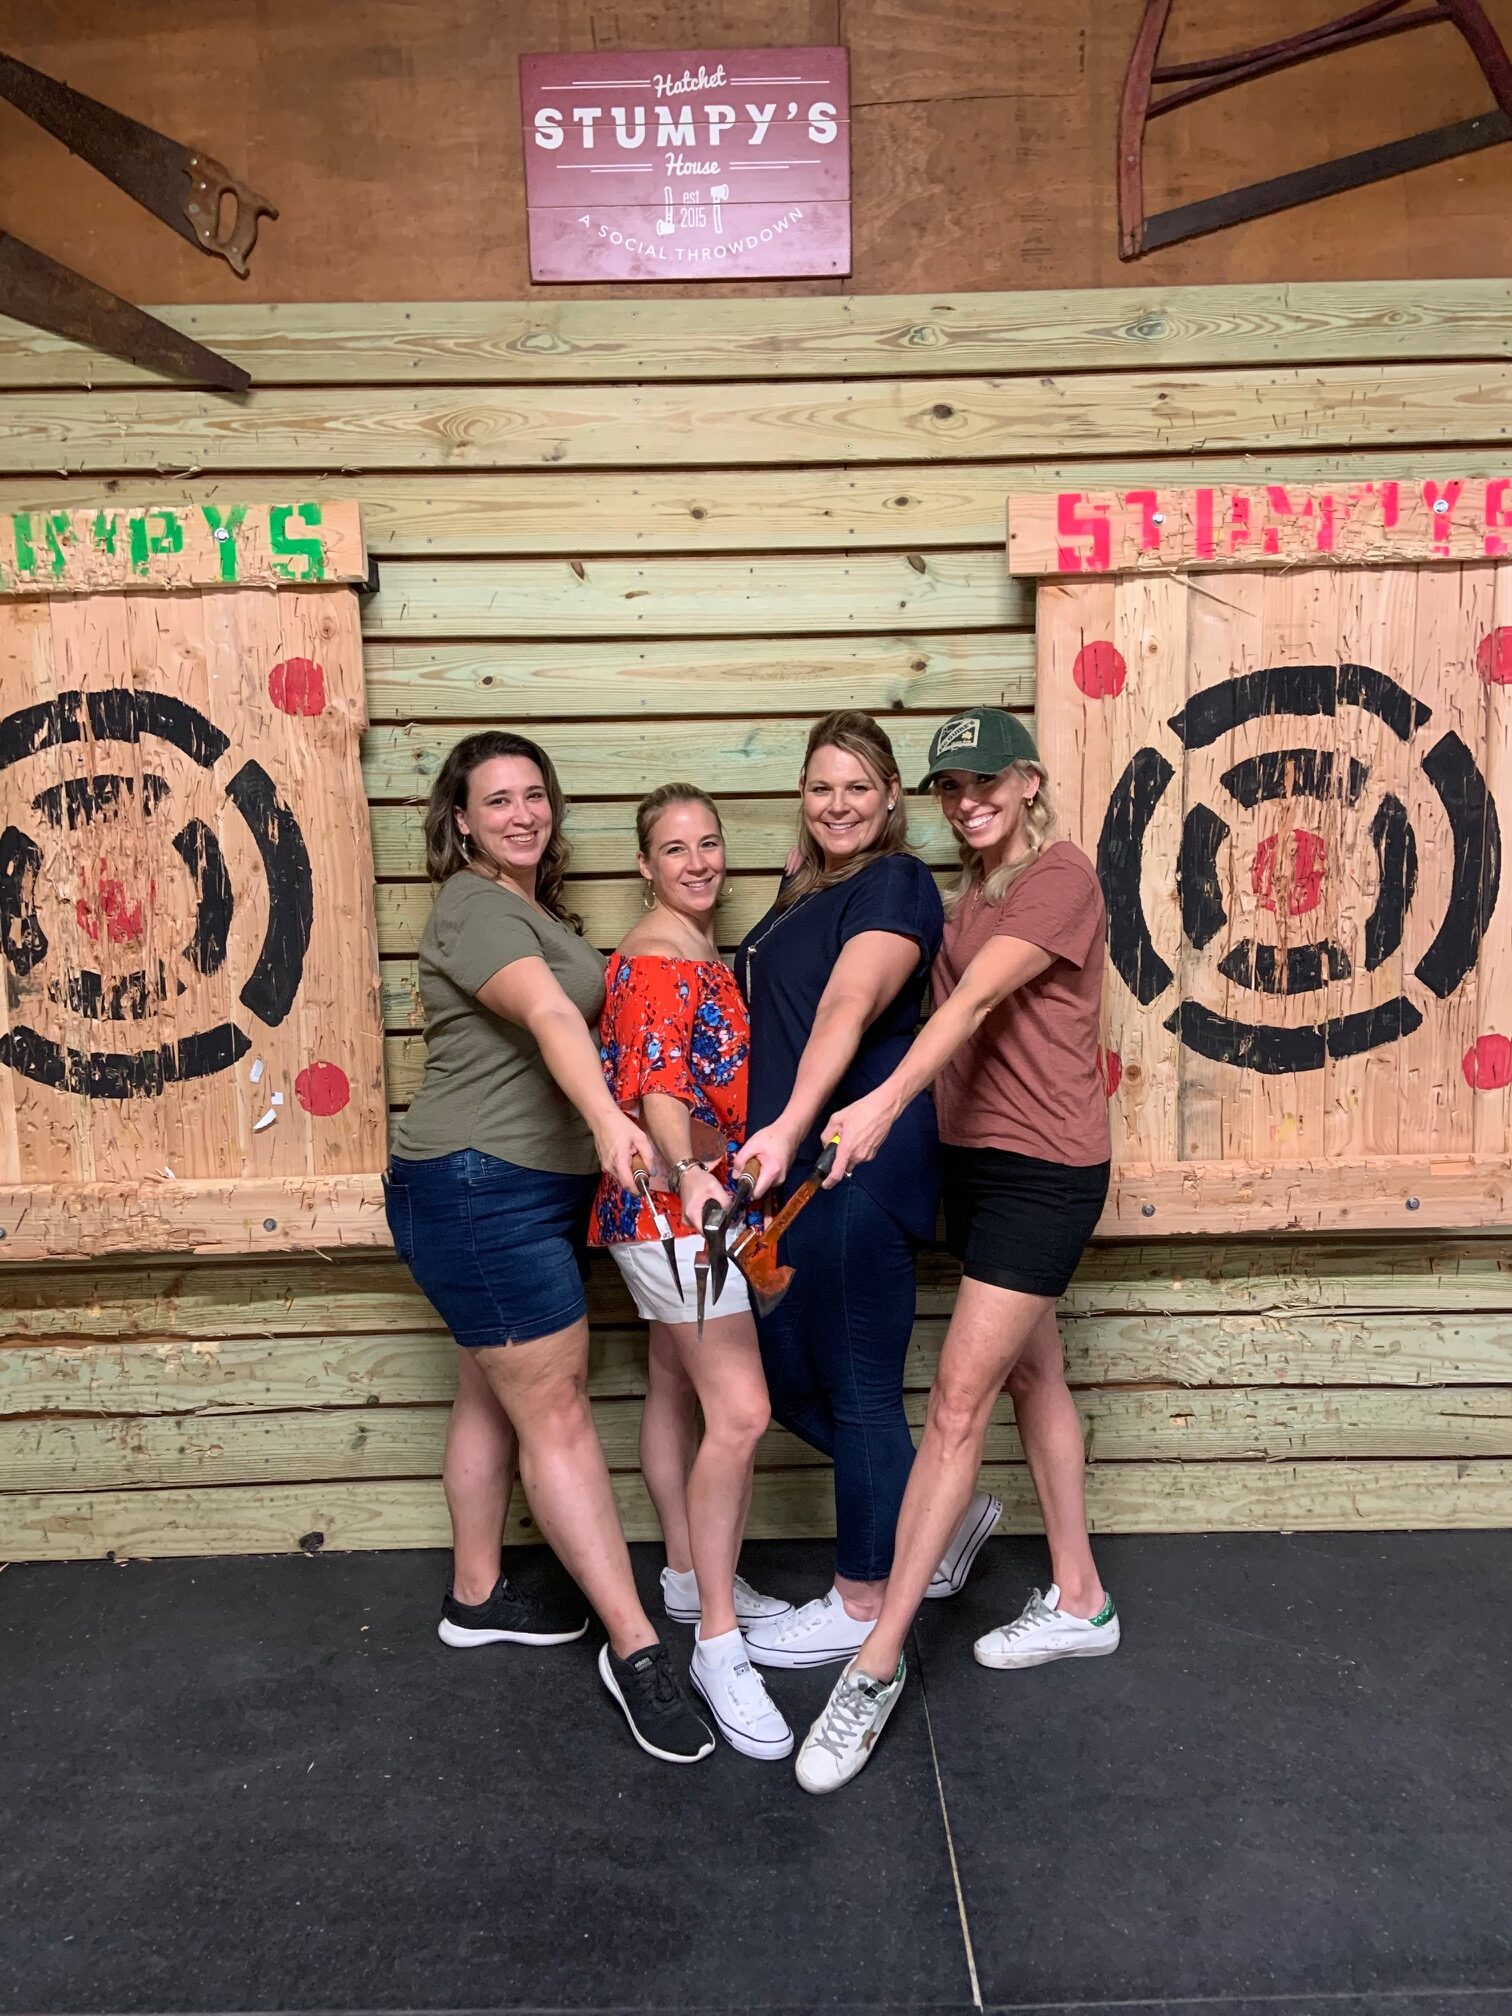 Ladies posing in front of a target